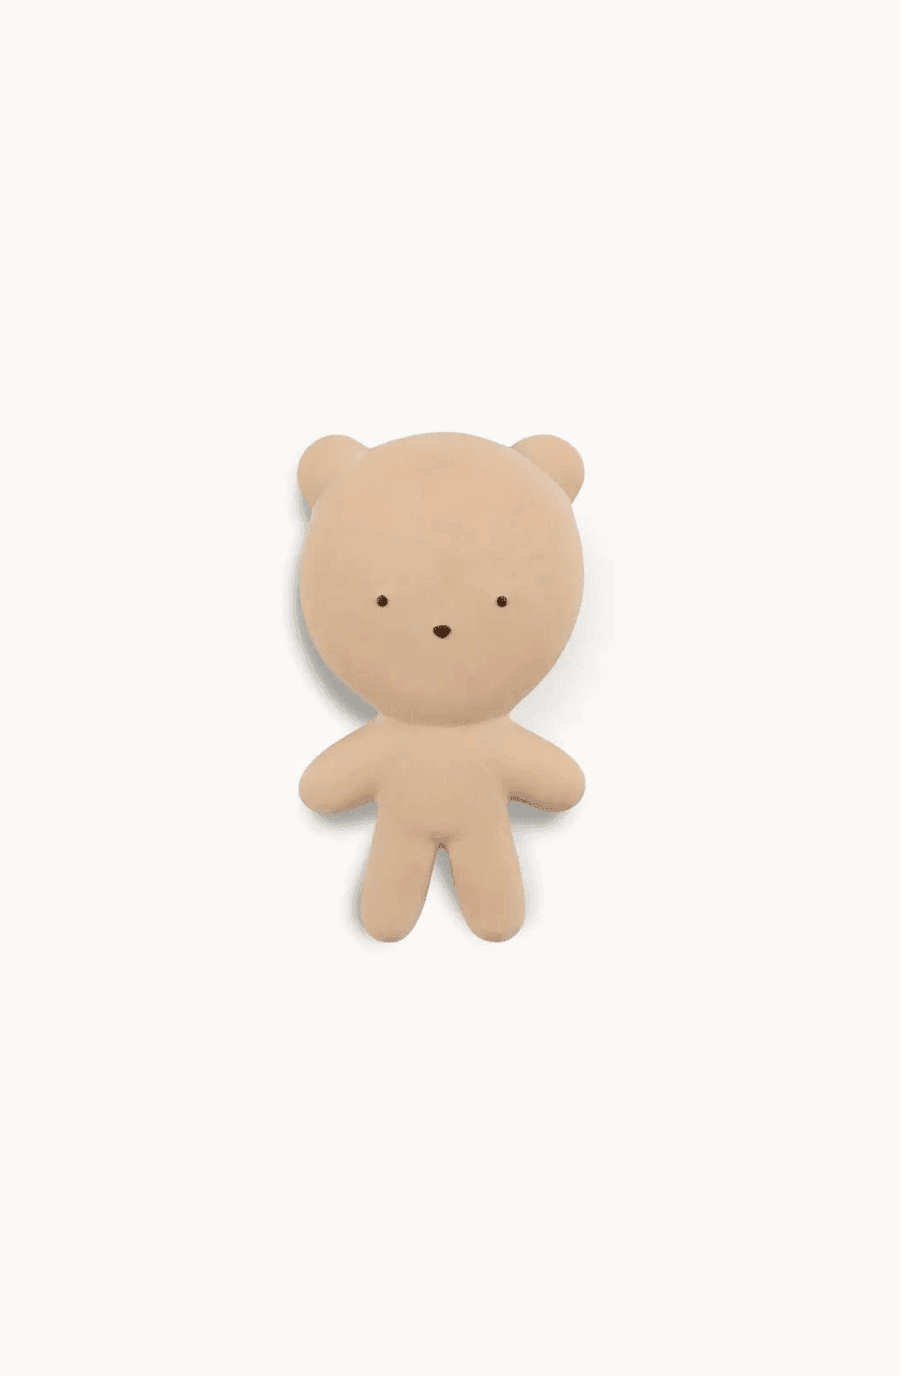 We are Gommu children's imaginative play mini baby bear, Fern